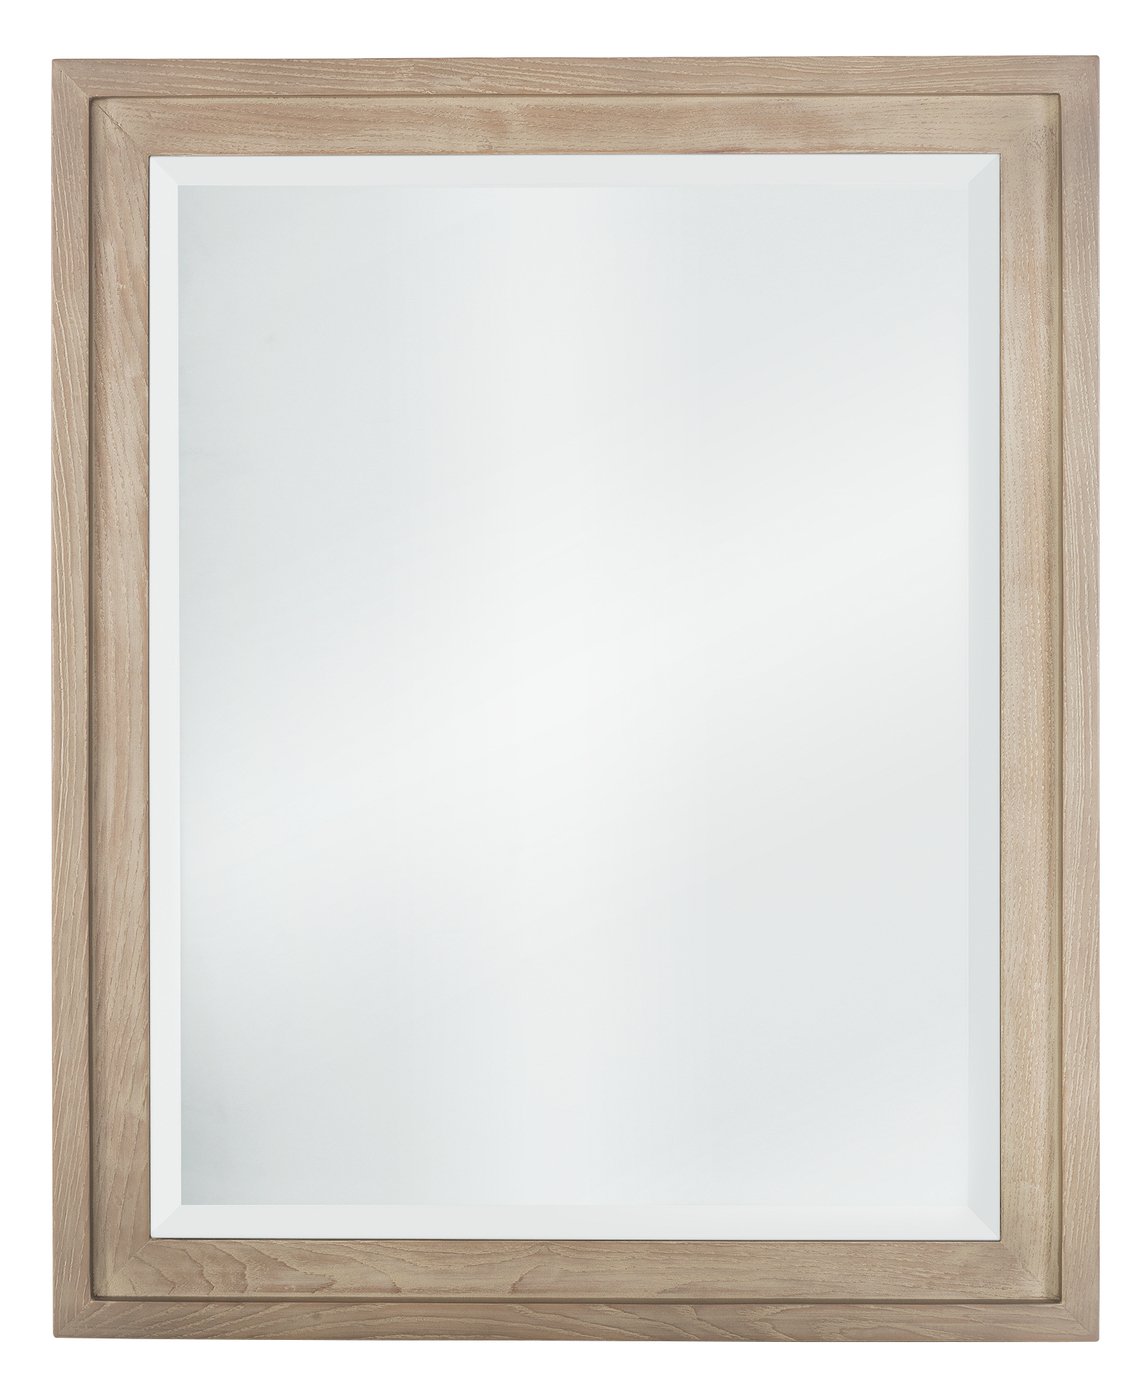 Argos Home Rectangular Mirror - White Wash